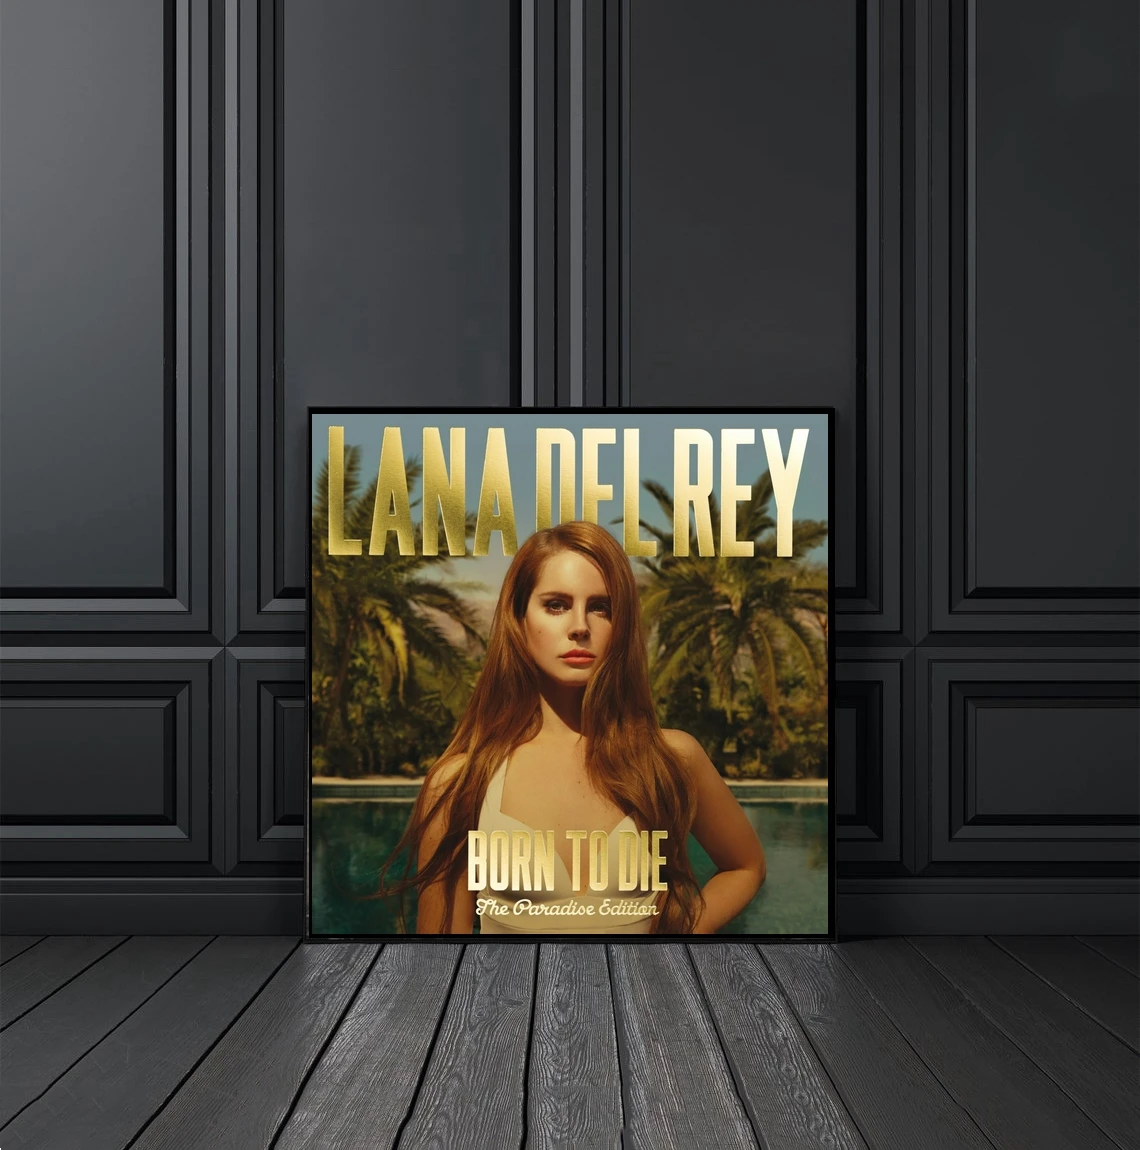 Lana Del Rey - Paradise -  Music